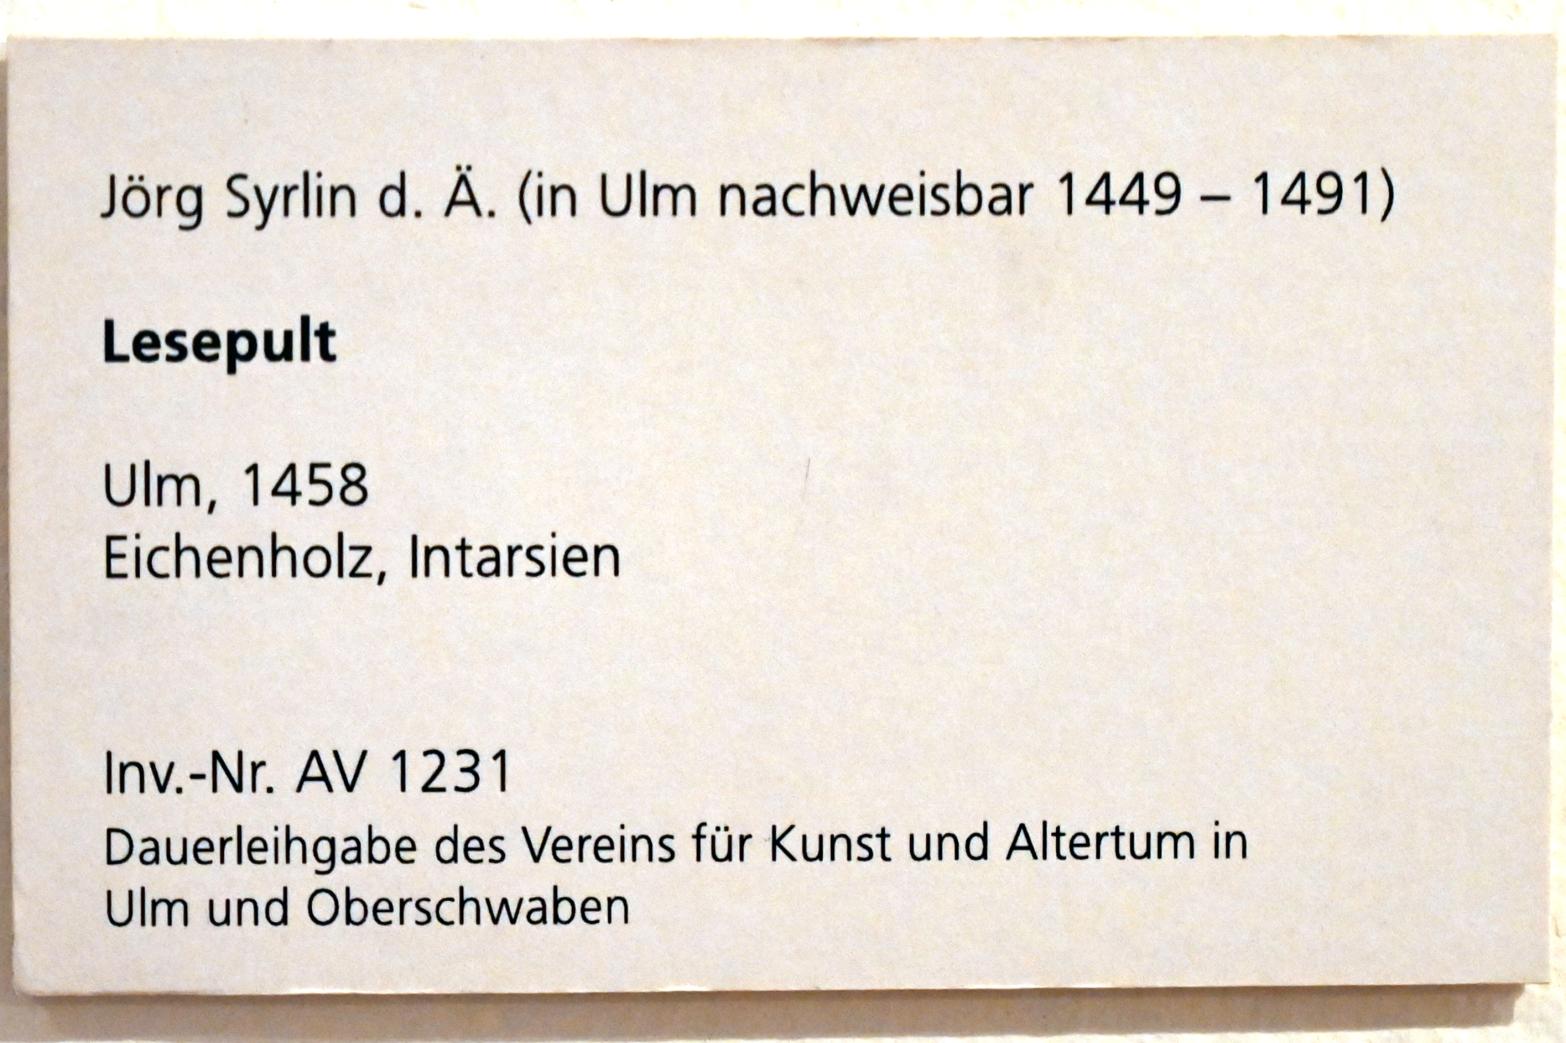 Jörg Syrlin der Ältere (1458–1475), Lesepult, Ulm, Museum Ulm, Saal 2, 1458, Bild 3/3